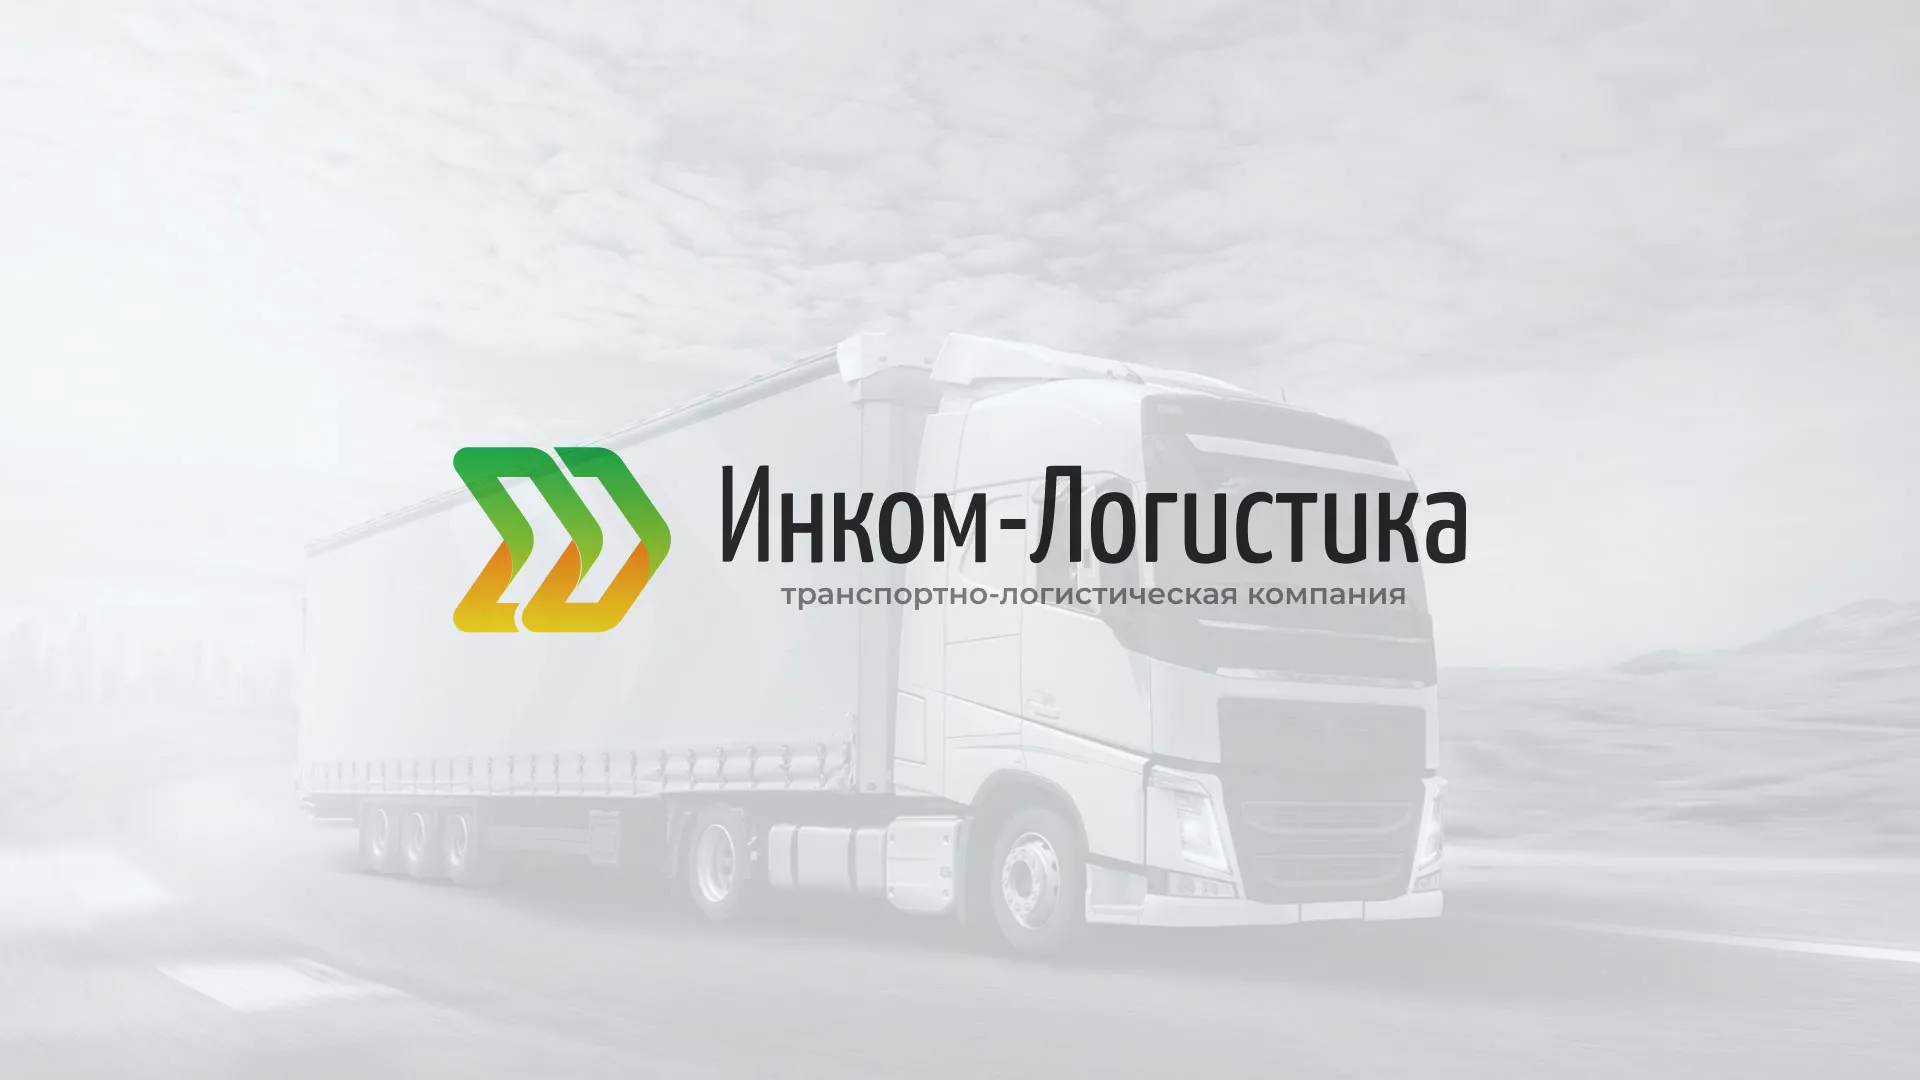 Разработка логотипа и сайта компании «Инком-Логистика» в Пушкине